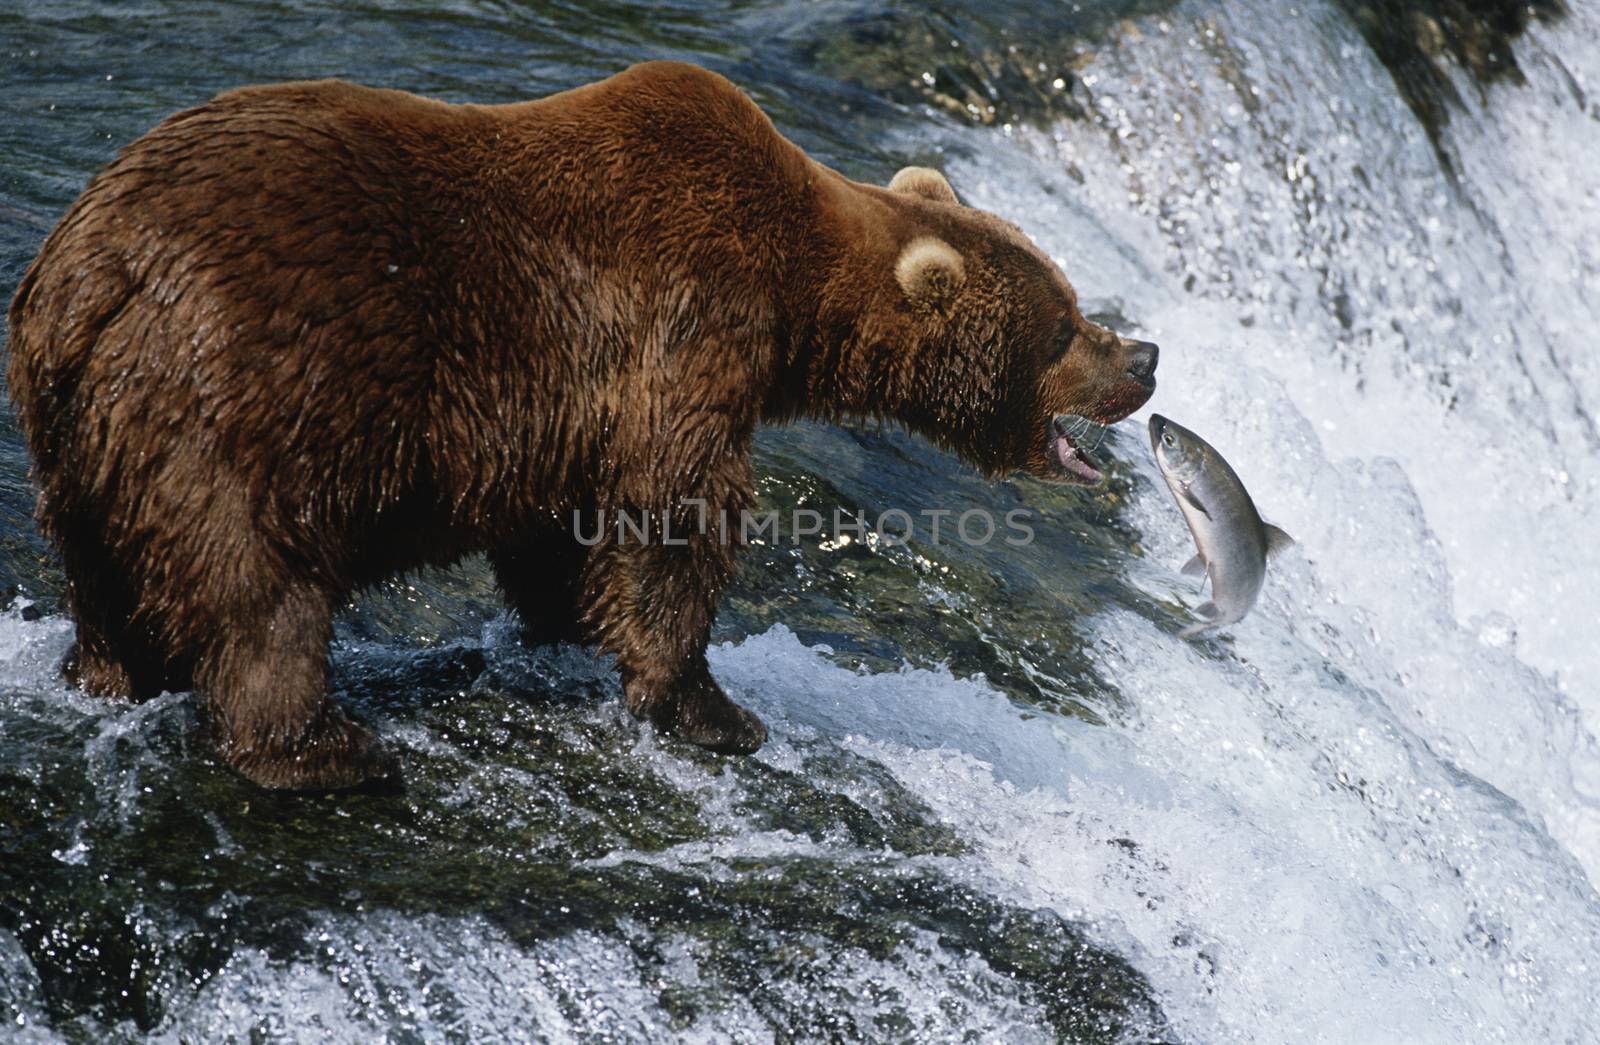 USA, Alaska, Katmai National Park, Brown Bear catching Salmon in river, side view by Jaanaaa